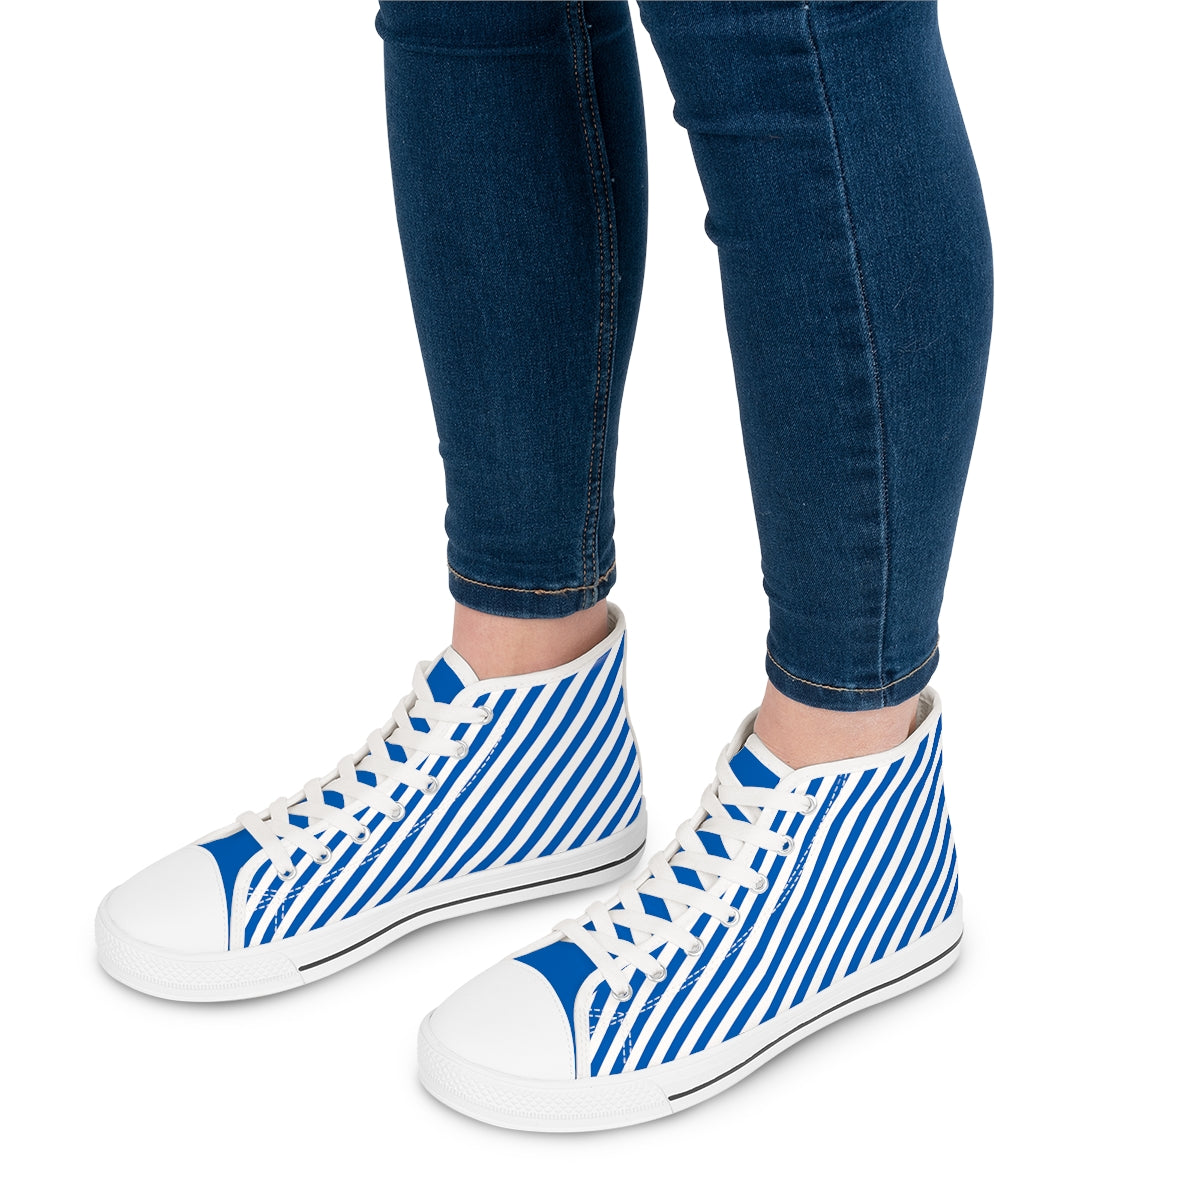 Women's Striped High Top Sneakers